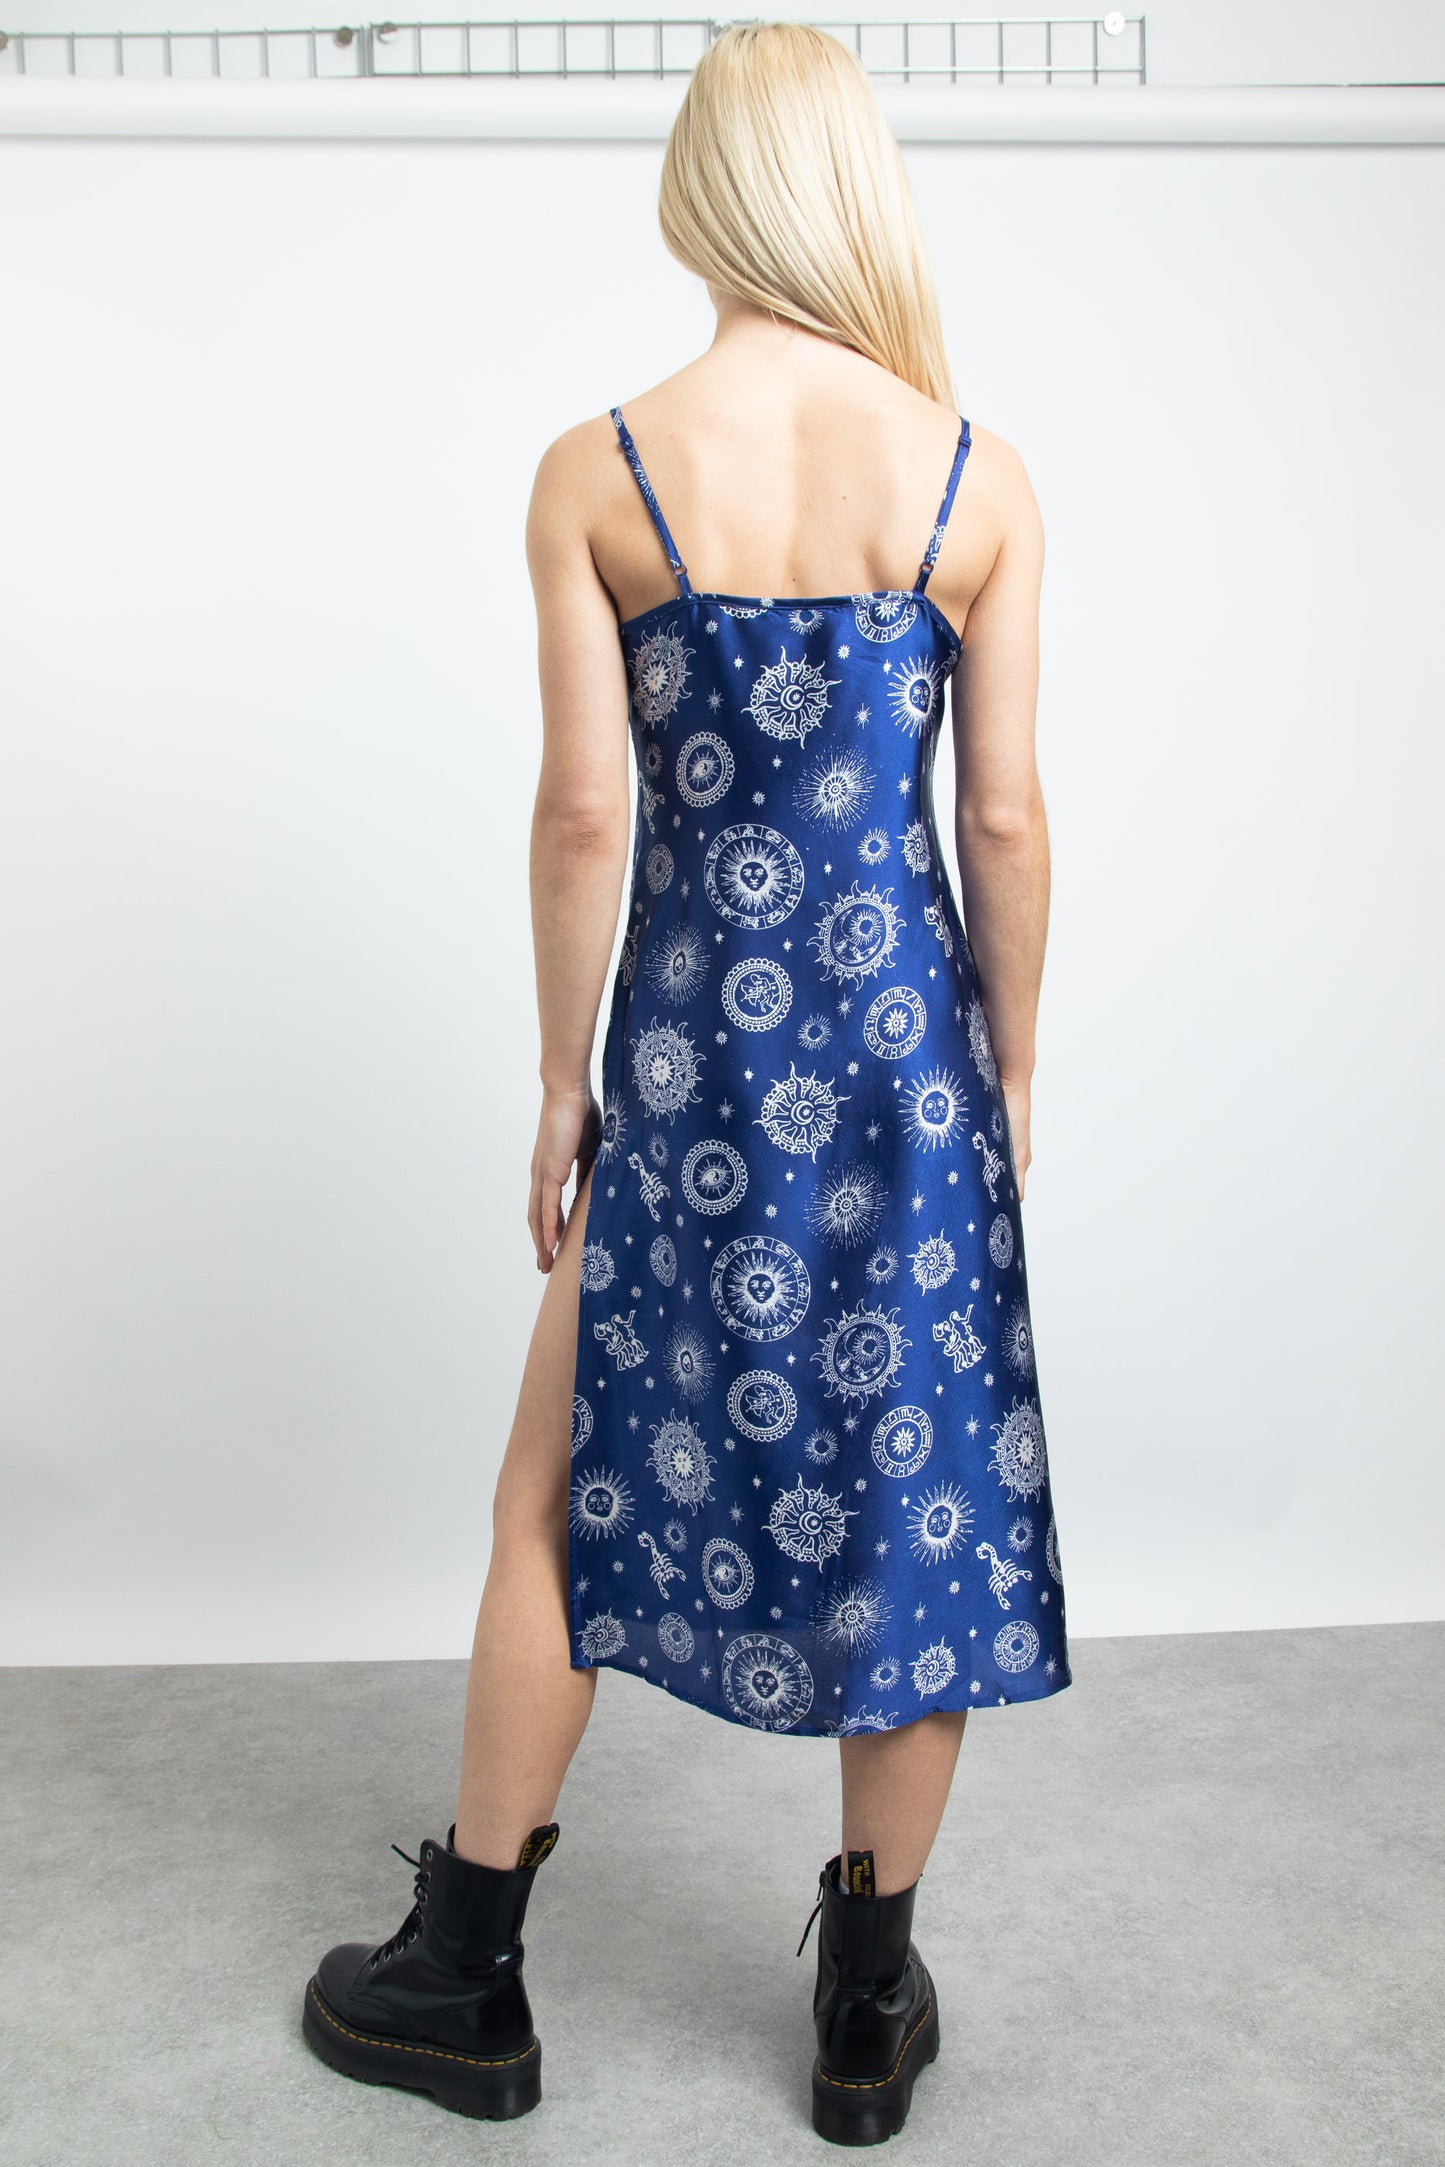 Daisy Street - Silky Blue Astrology Midi Dress